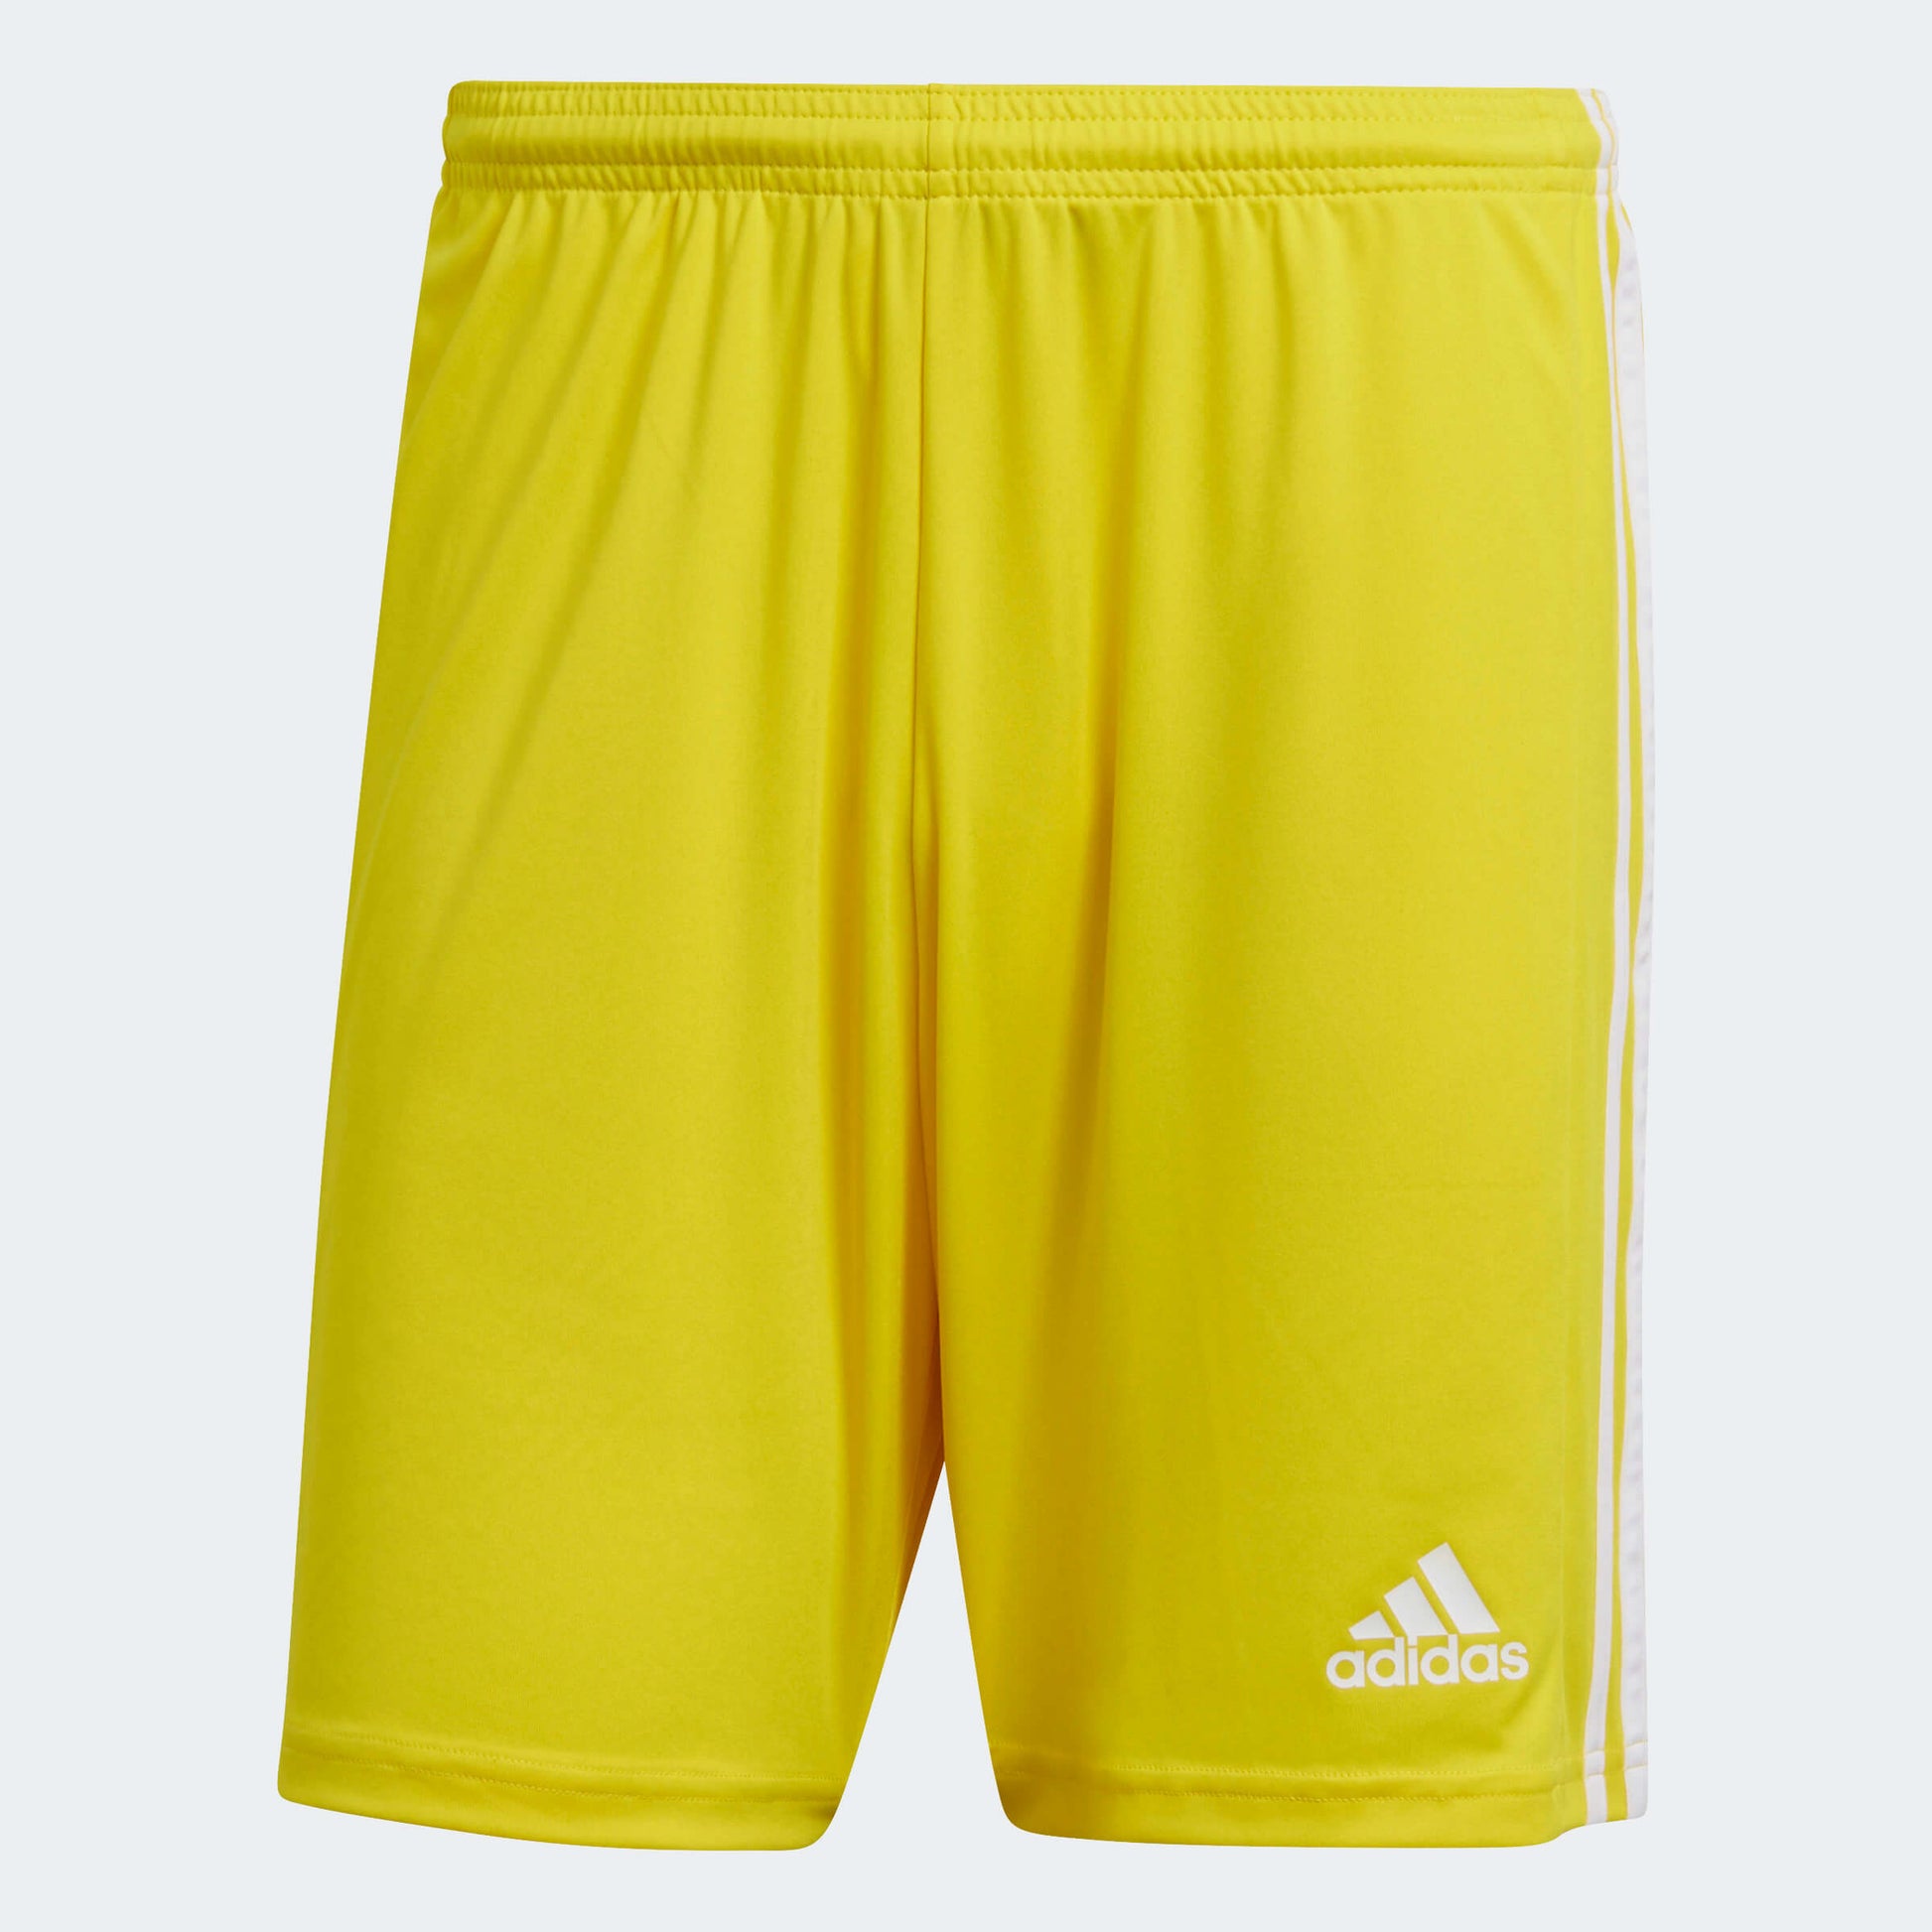  adidas Squadra 21 Shorts Yellow-White (Front)